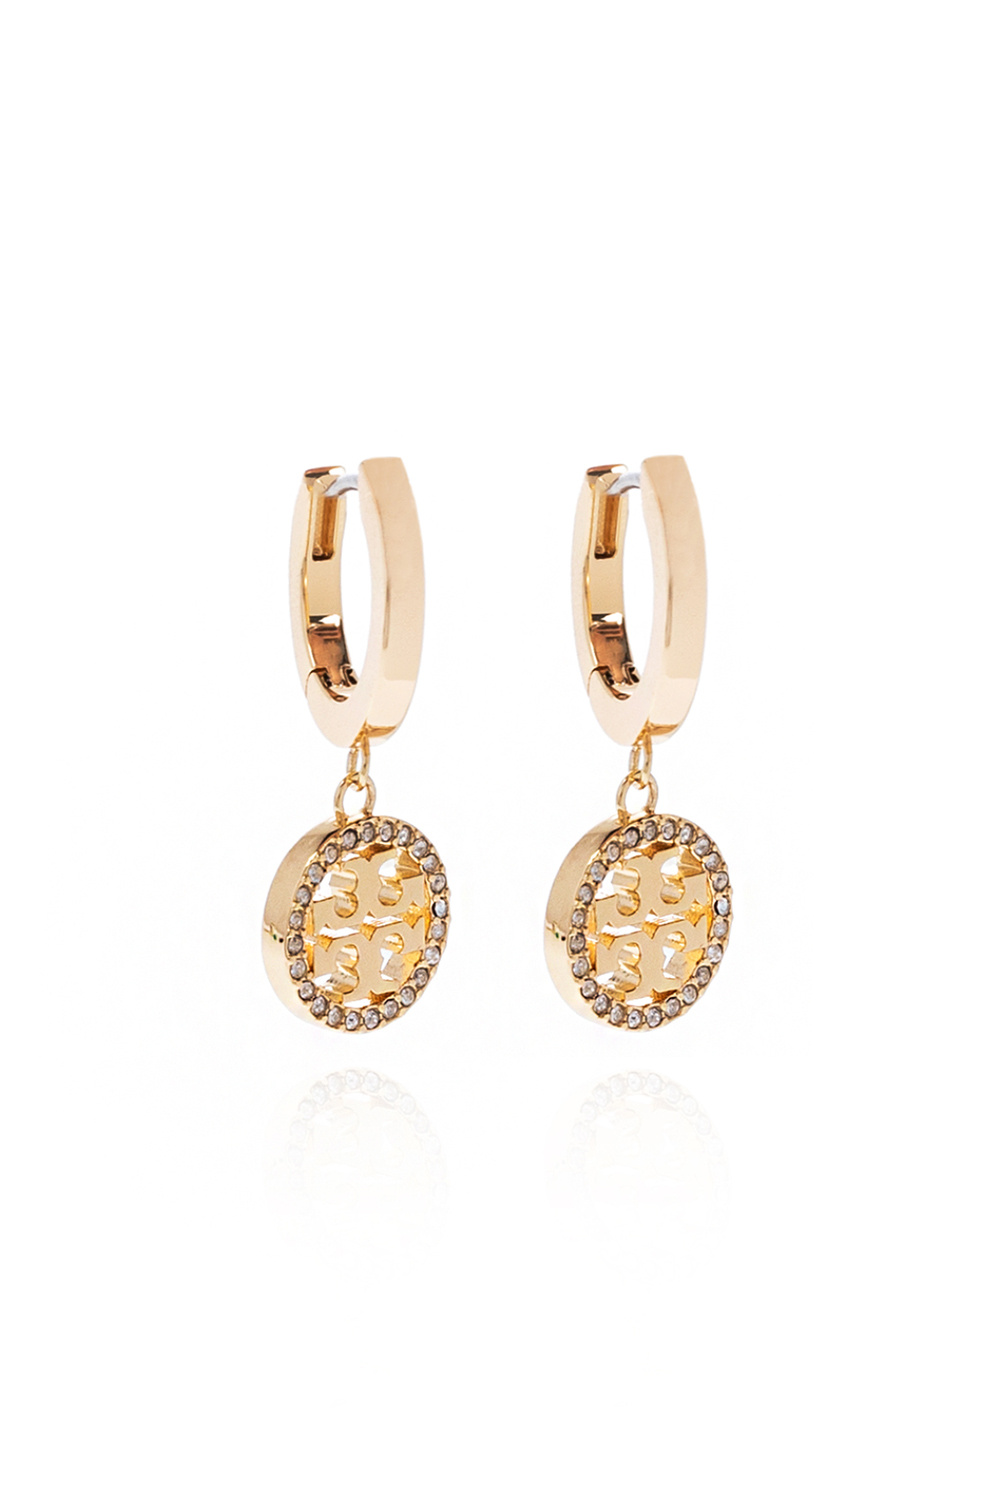 Gold 'Miller' earrings with logo Tory Burch - Vitkac Canada